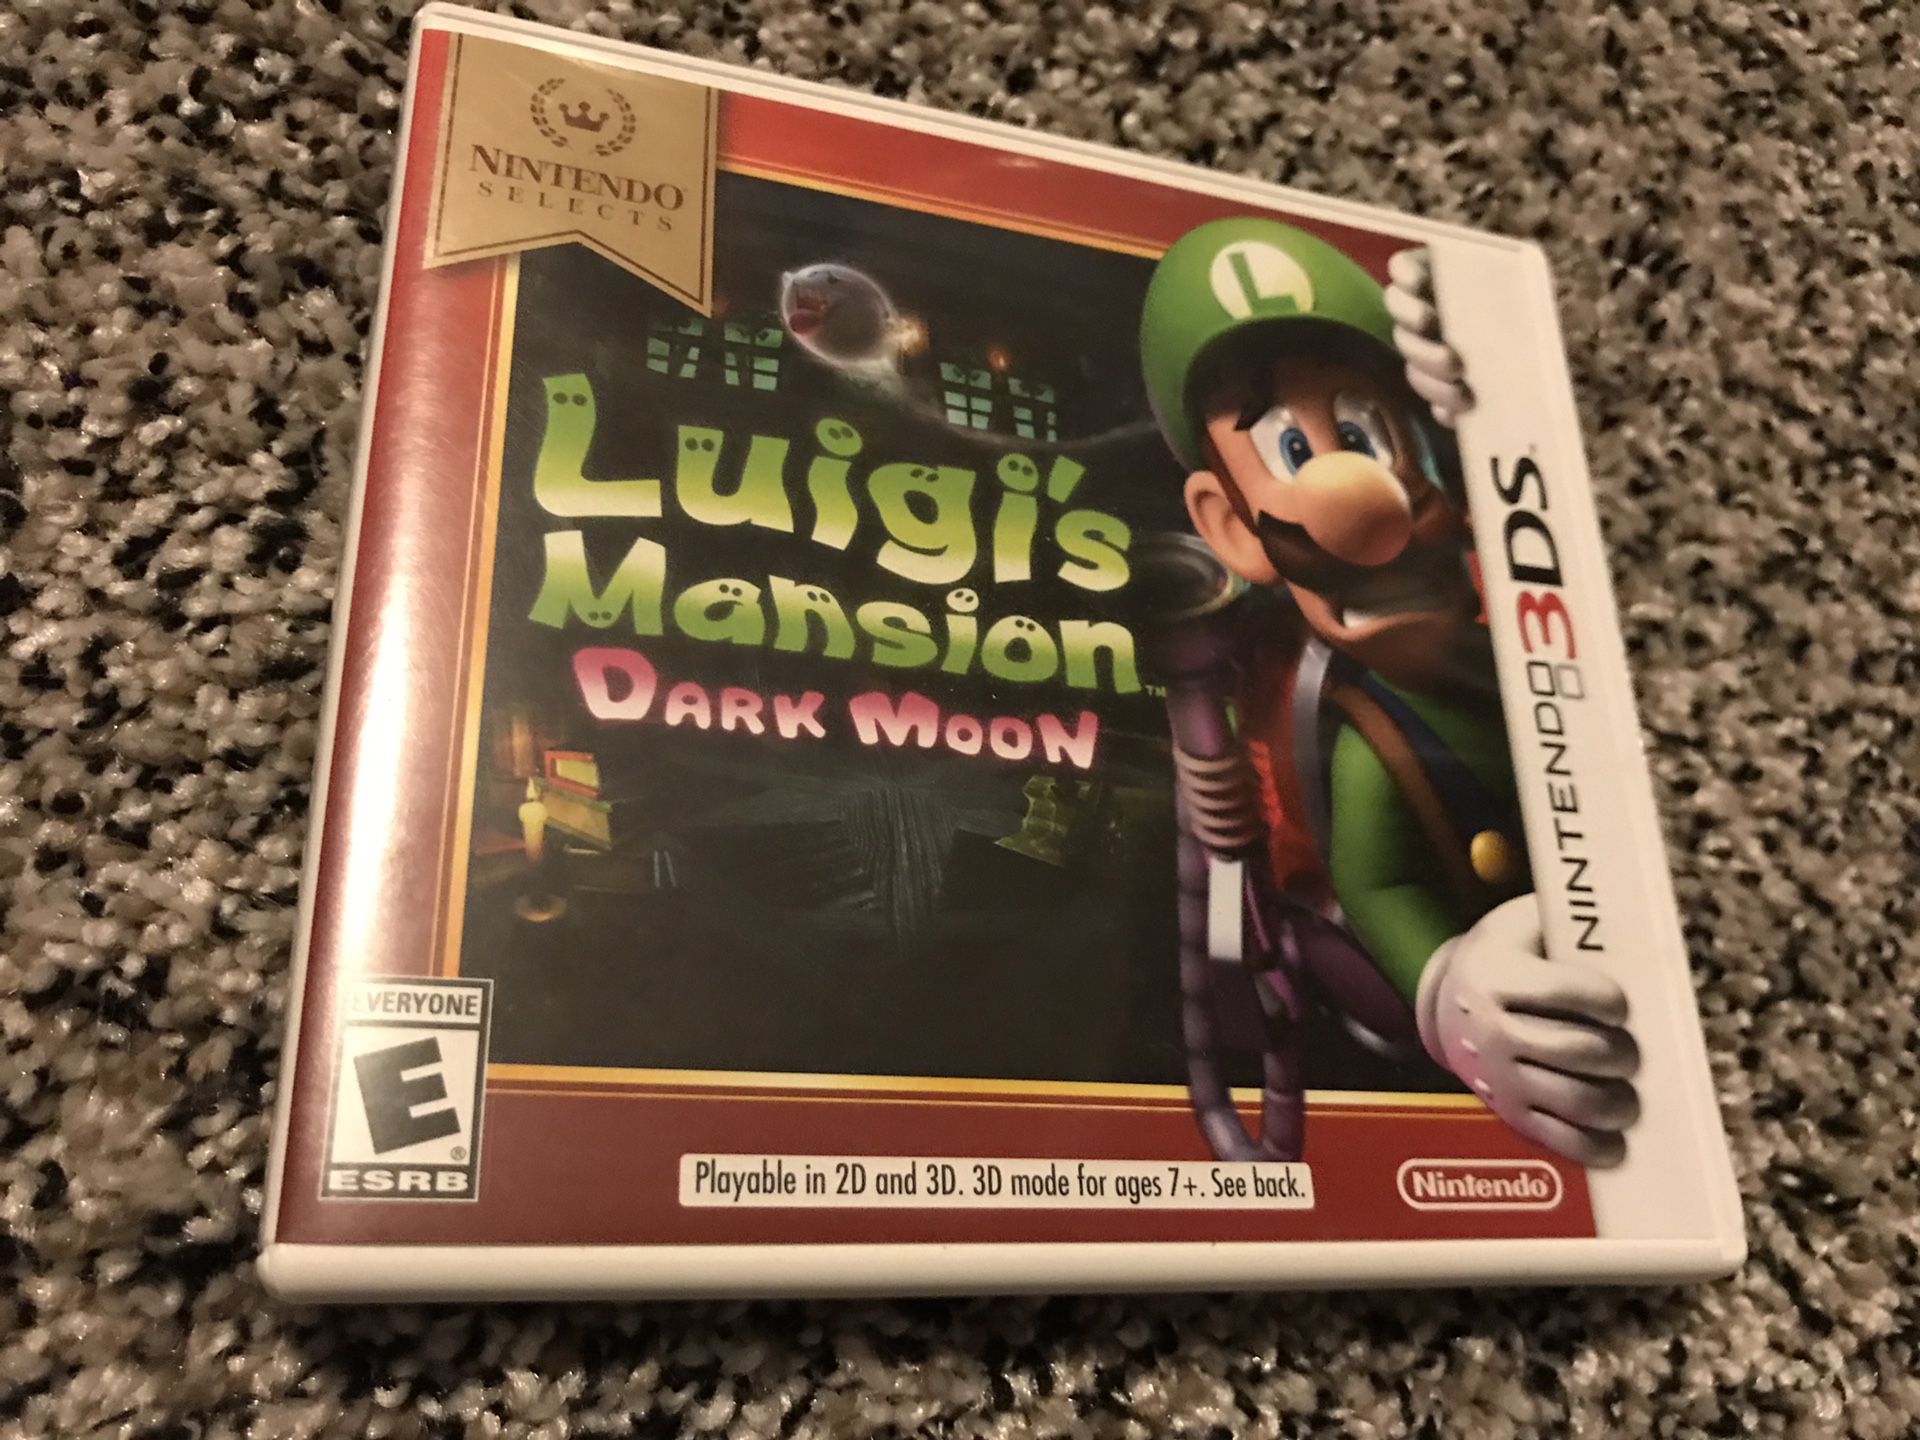 Luigi’s Mansion Dark Moon for Nintendo 3DS